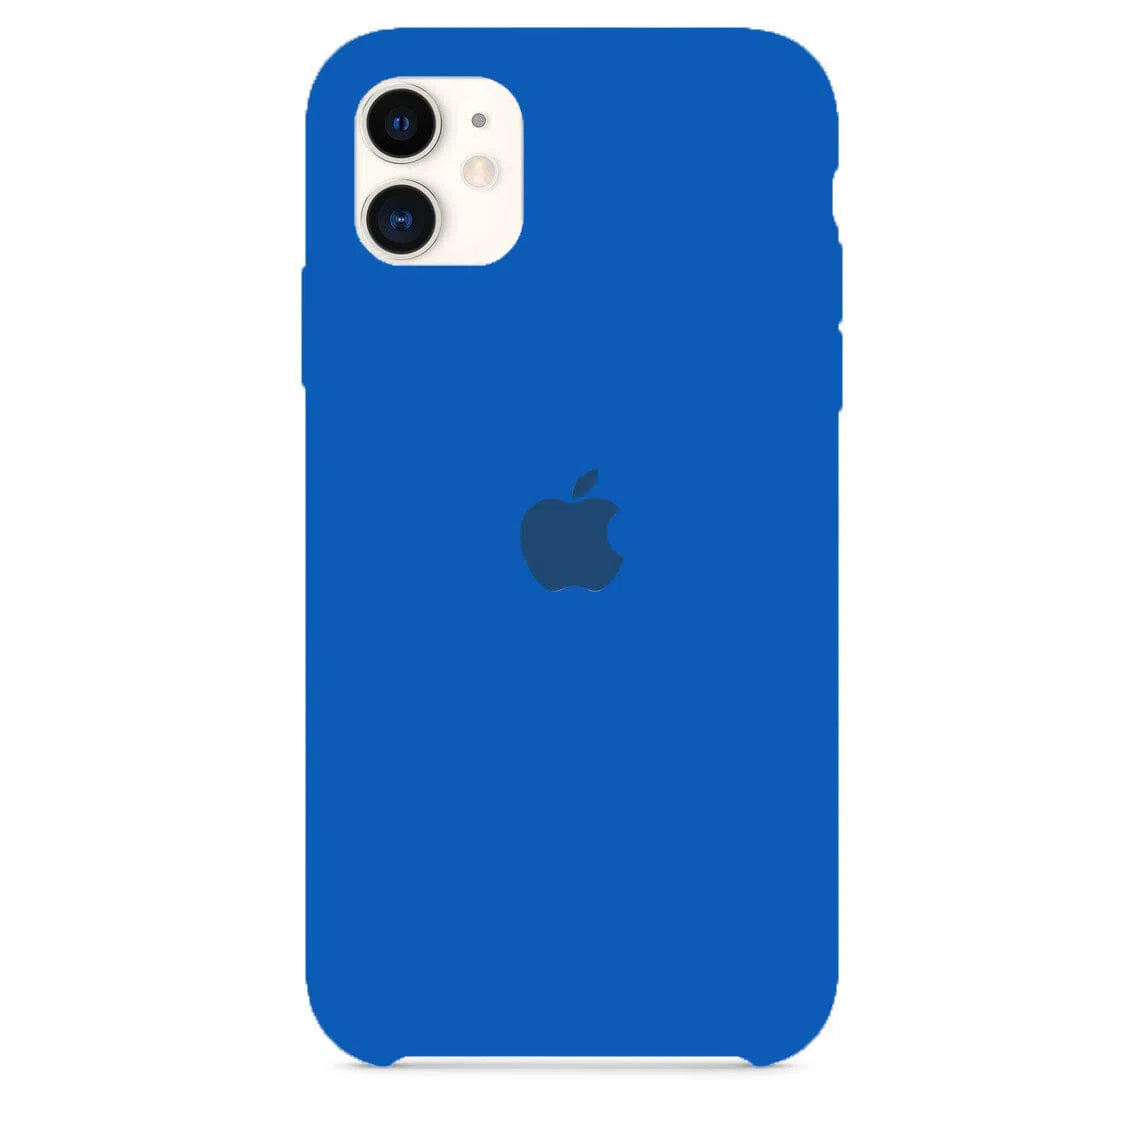 Husa iPhone Silicone Case Blue Cobalt (Albastru) Anca's Store 11 